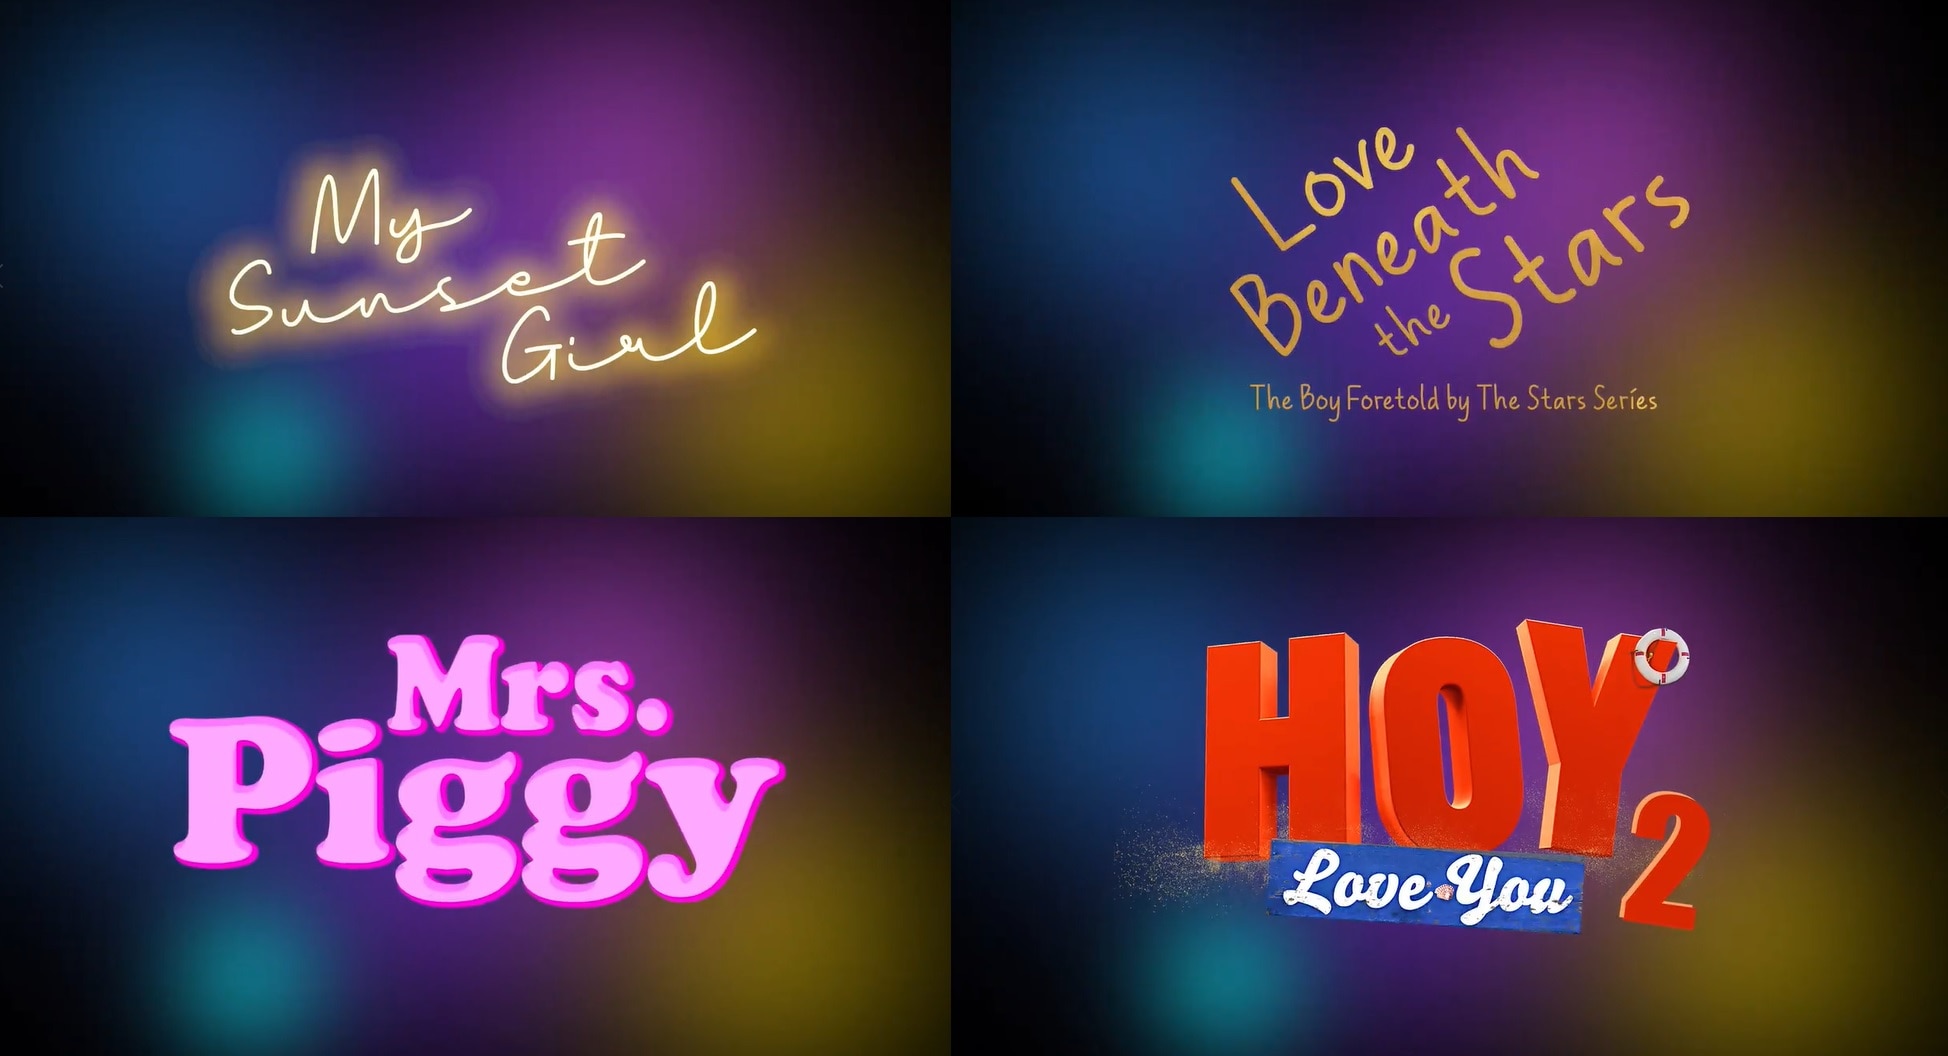 Upcoming iWantTFC originals My Sunset Girl, Love Beneath the Stars, Mrs  Piggy, and Hoy Love You Season 2